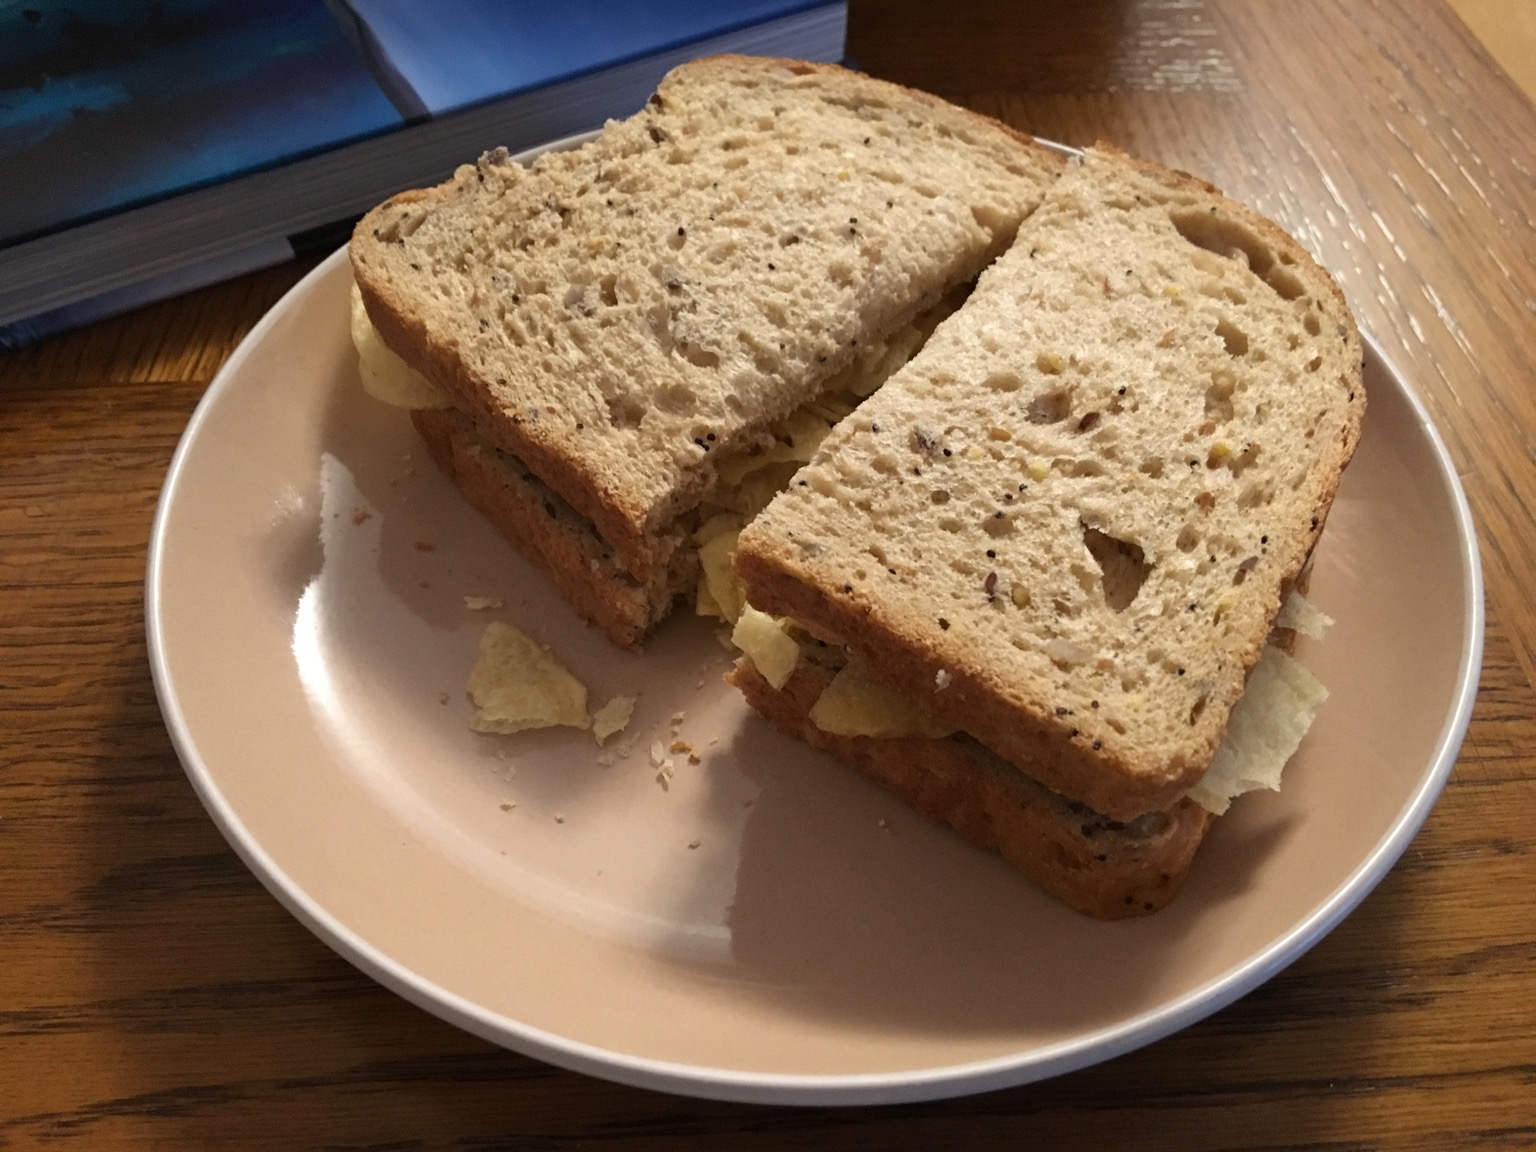 Halved brown crisp sandwich alongside a book